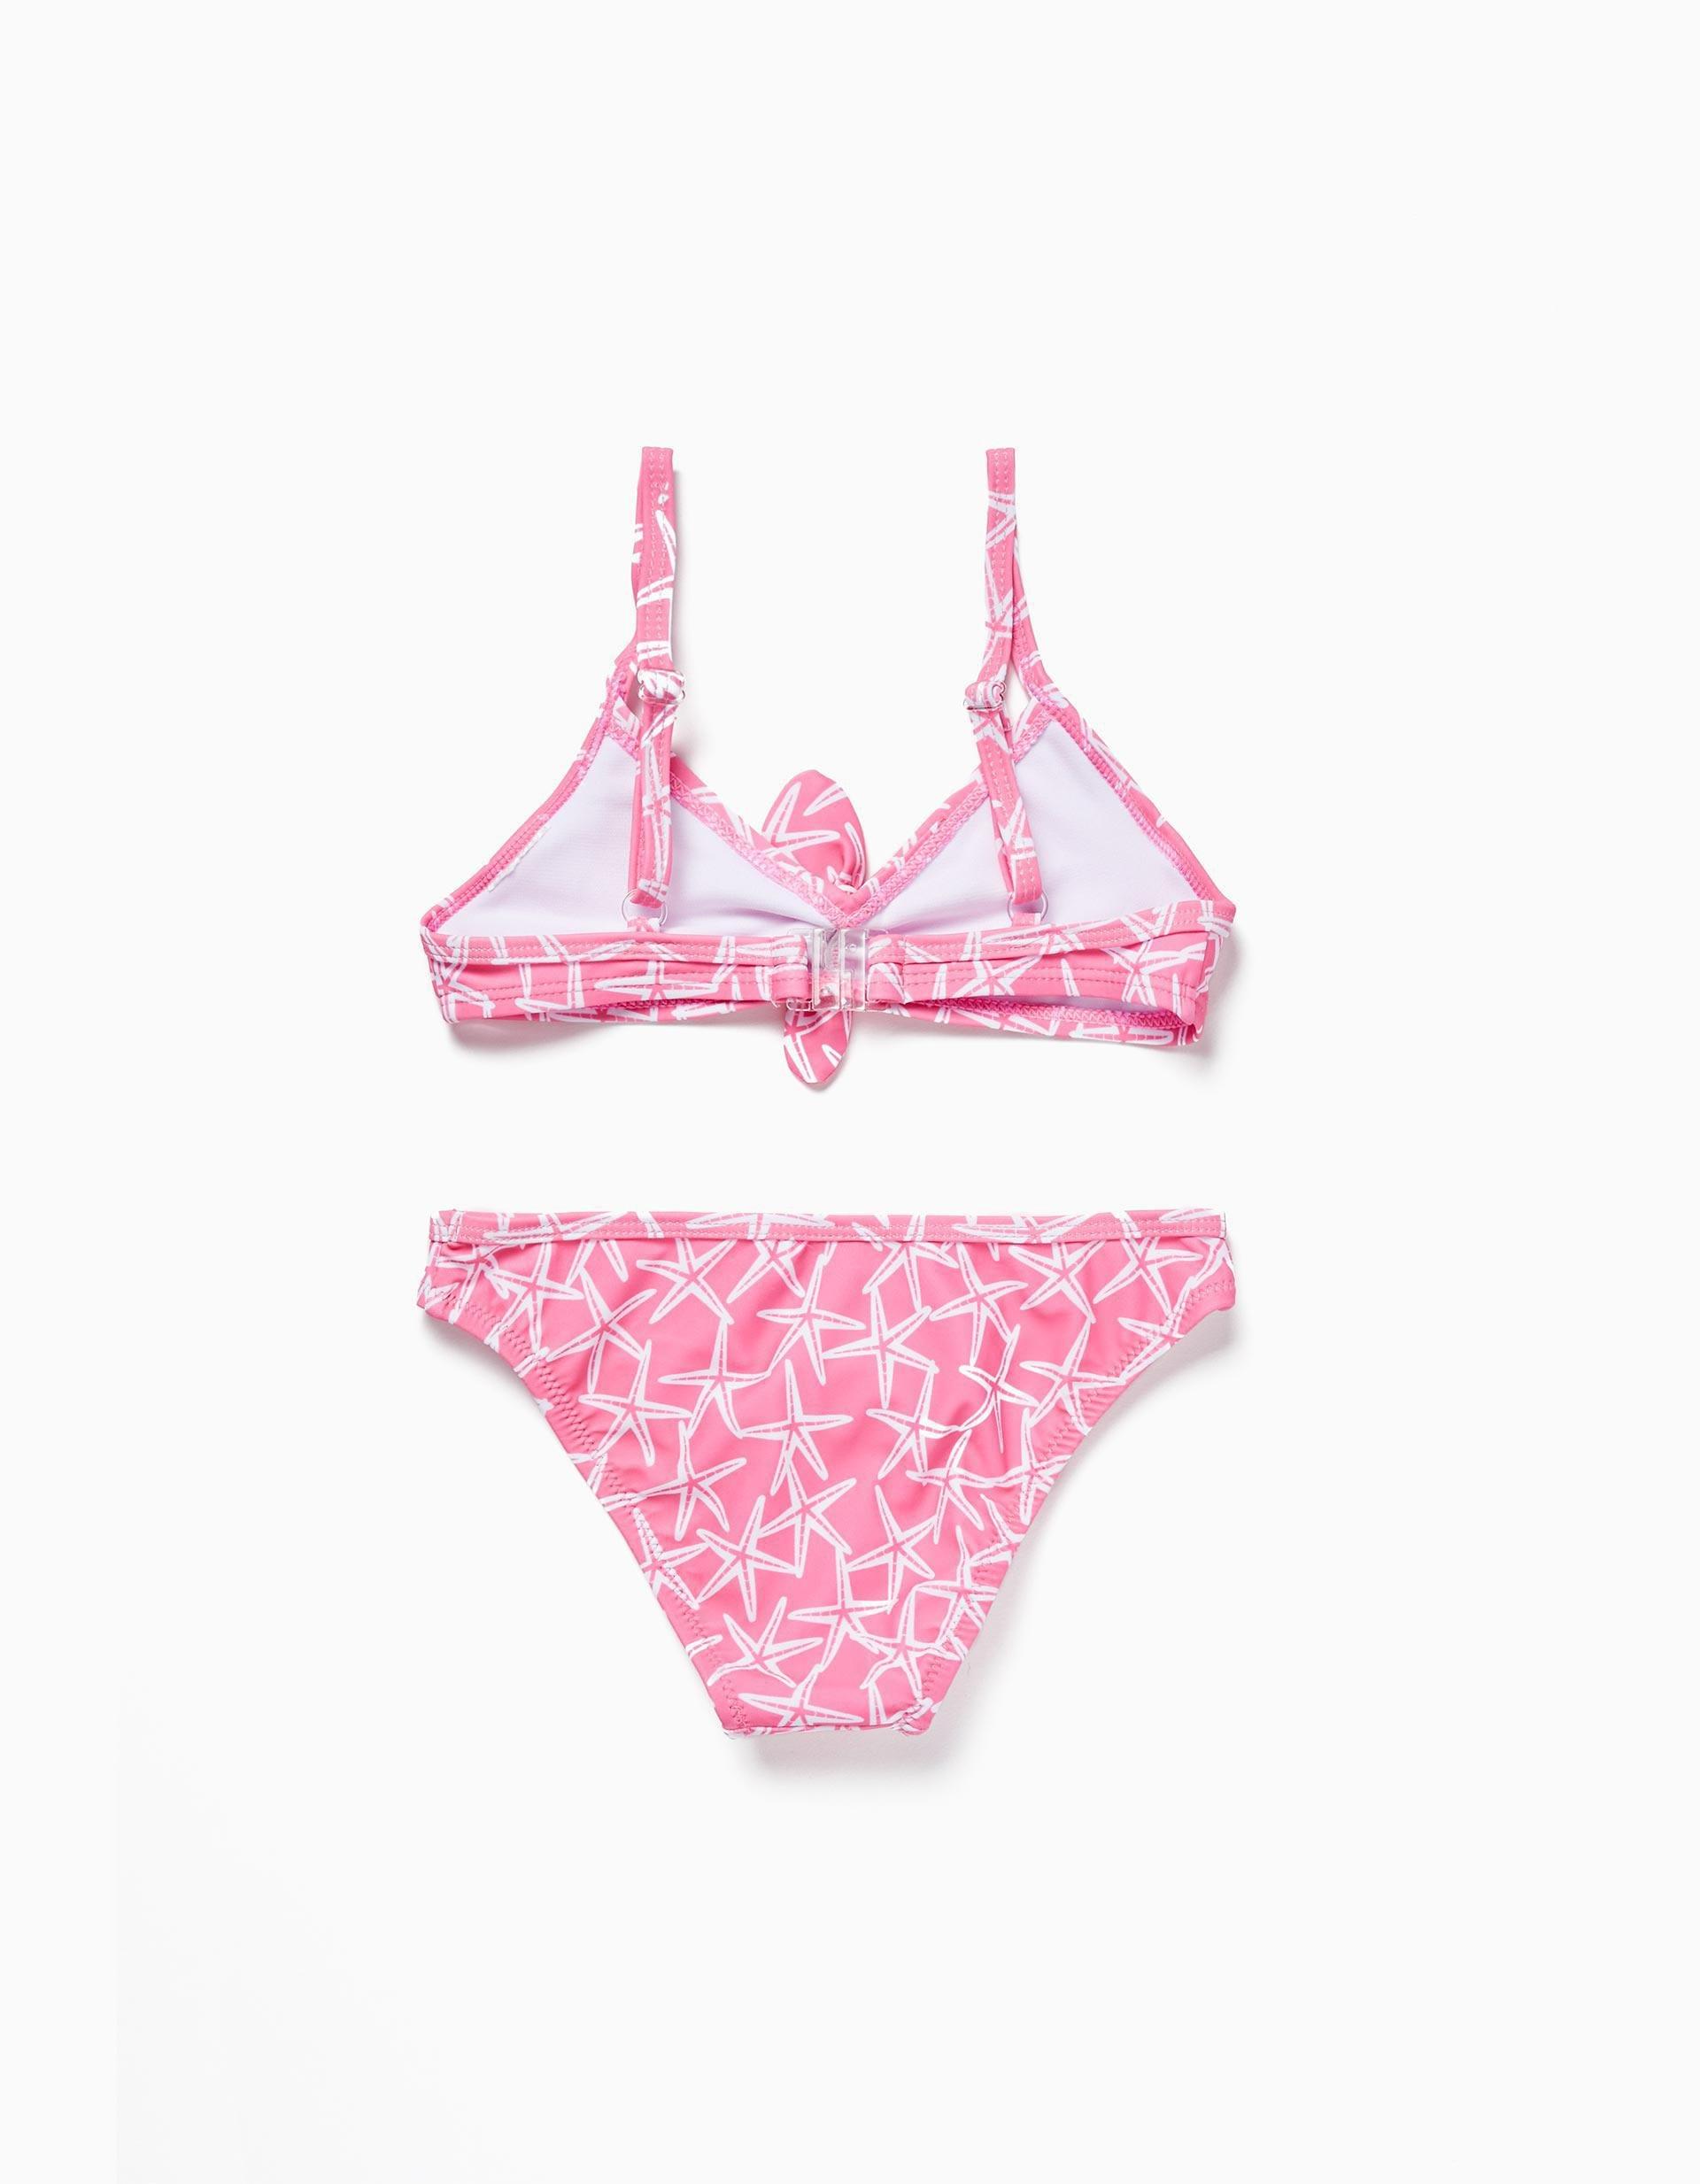 Zippy - Pink Printed Swimsuit, Kids Girls